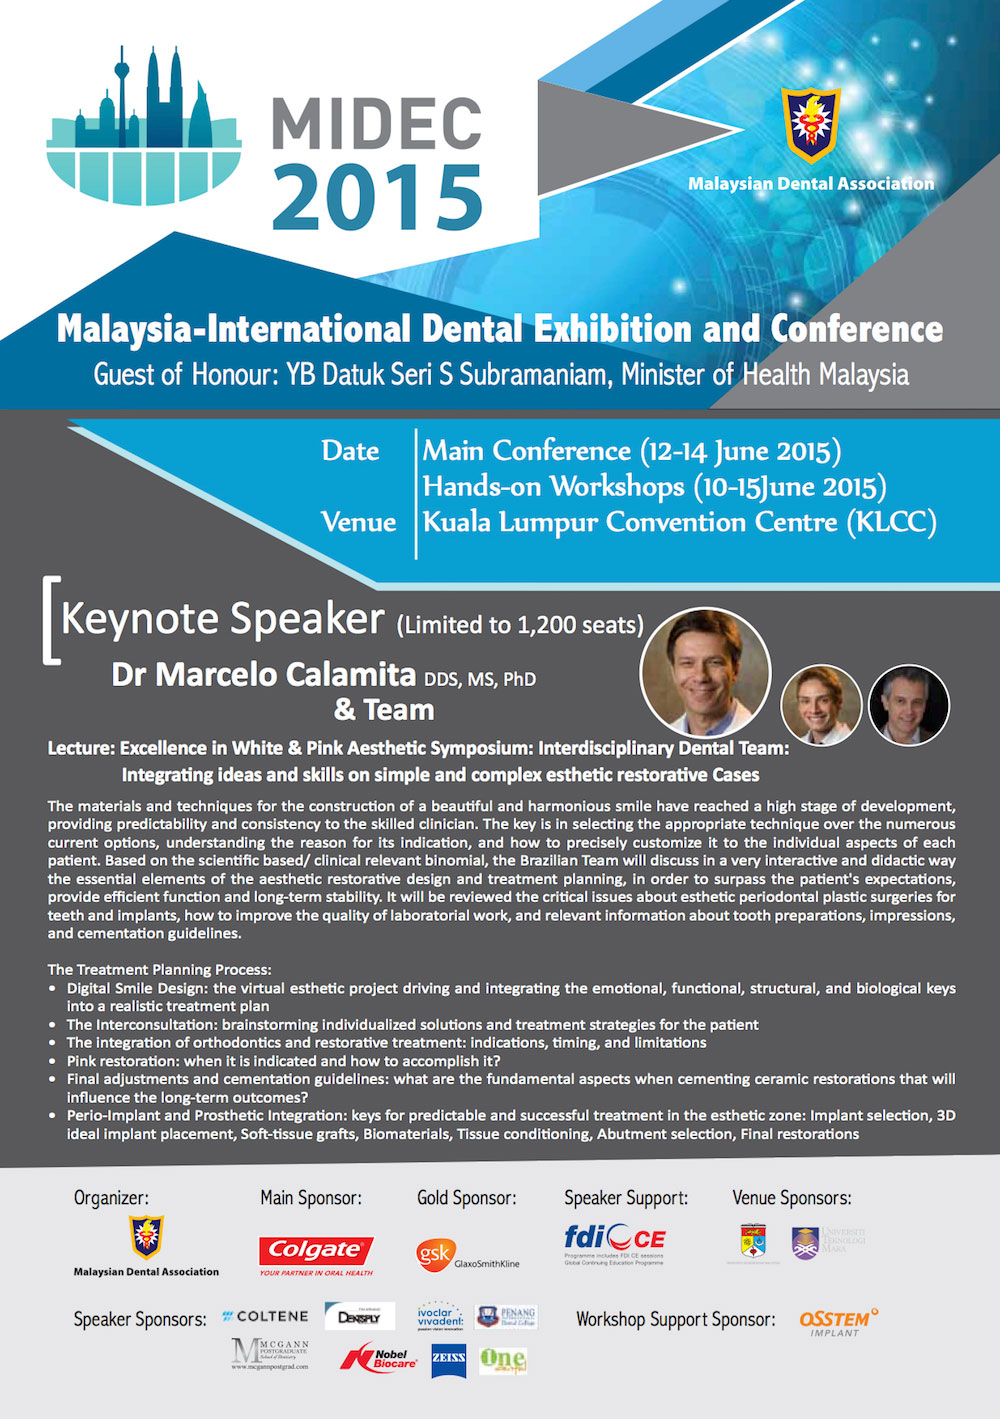 MIDEC-2015-MDA-Conference-1